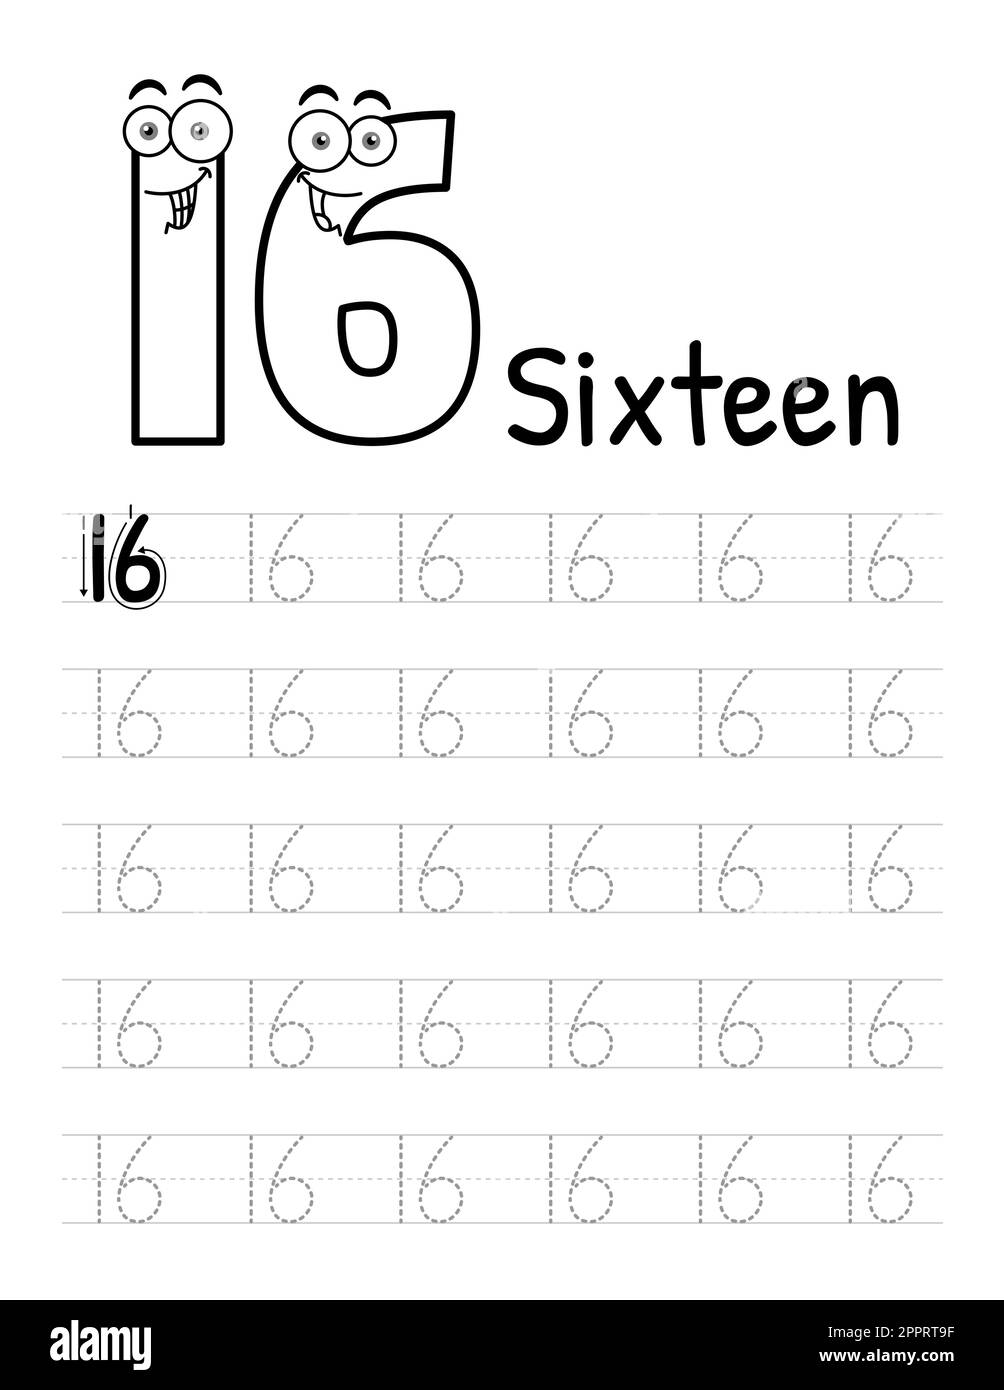 Number Tracing Book Interior For Kids. Children Writing Worksheet. Premium Vector Elements.-17 Stock Vector